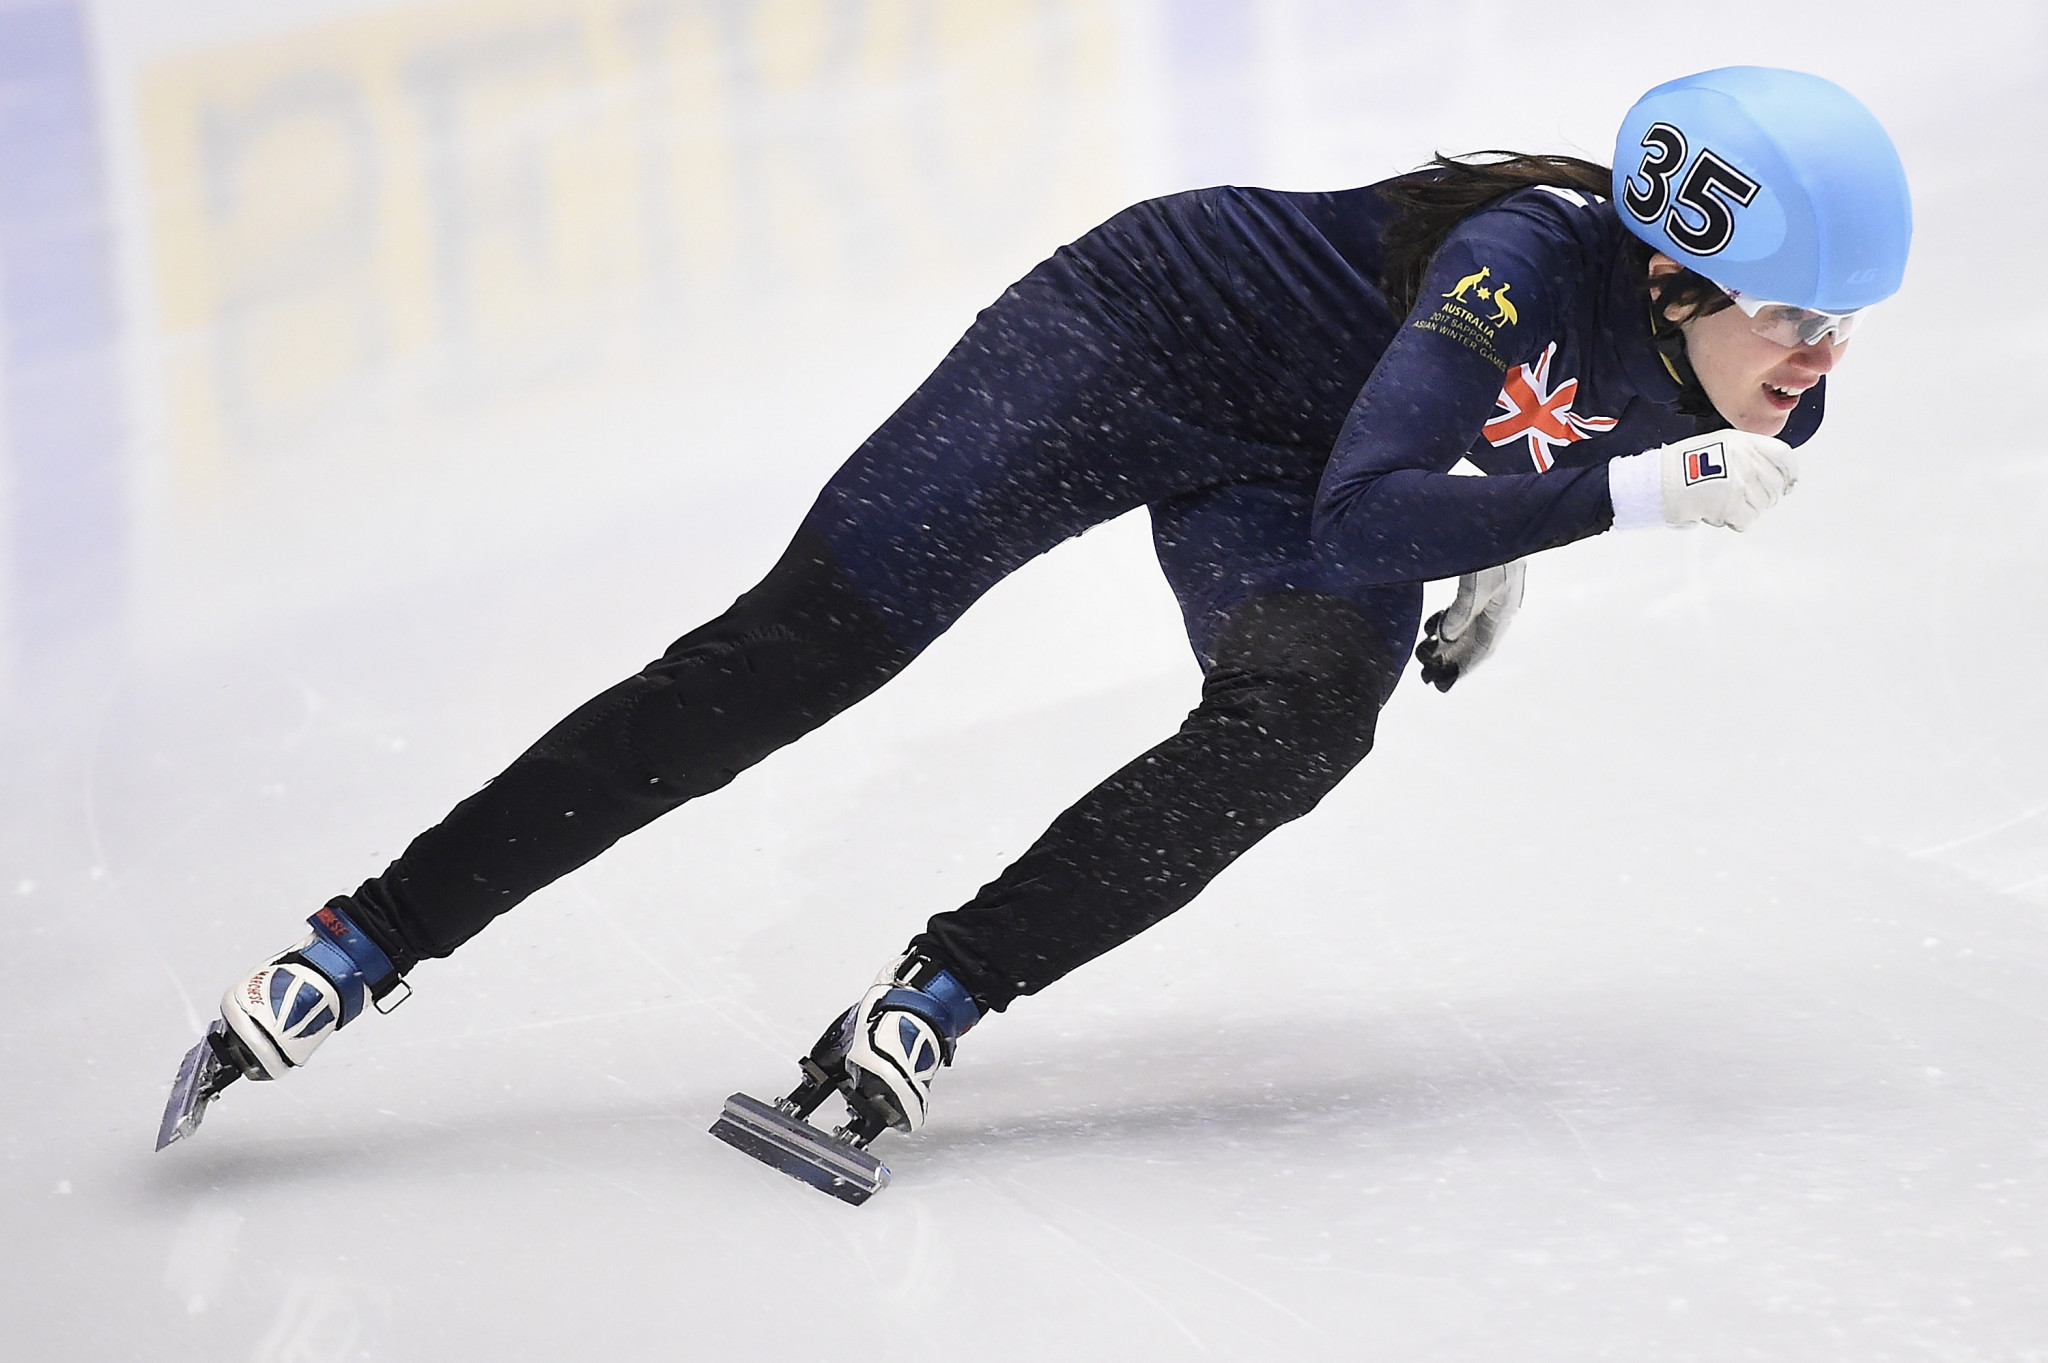 Sochi 2014 Olympian Deanna Lockett secured the female quota for Australia ©Getty Images